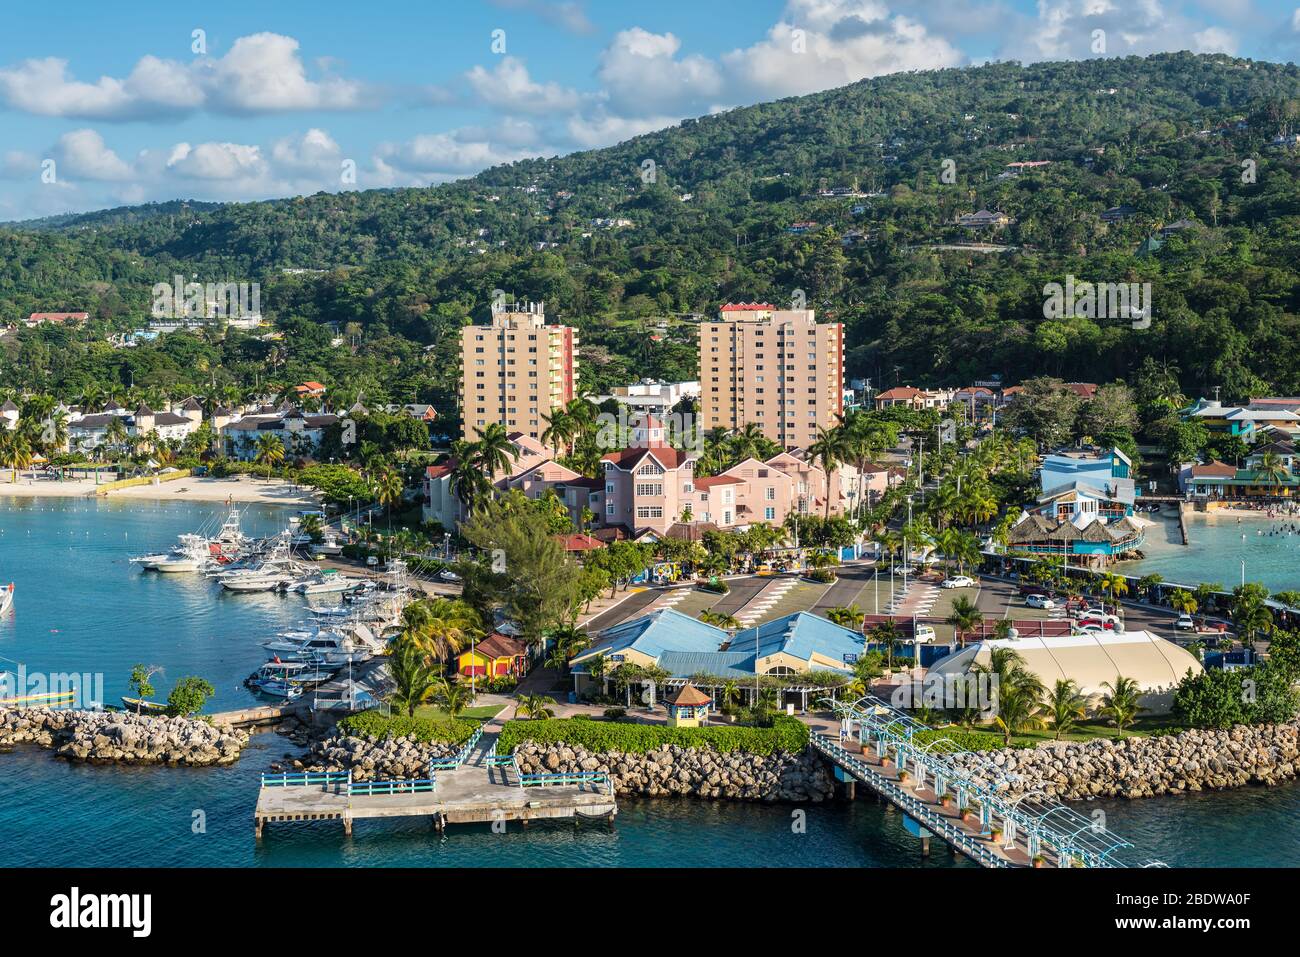 Ocho Rios, Jamaica - April 22, 2019: View from the ship to the Cruise terminal in the tropical Caribbean island of Ocho Rios, Jamaica. Stock Photo